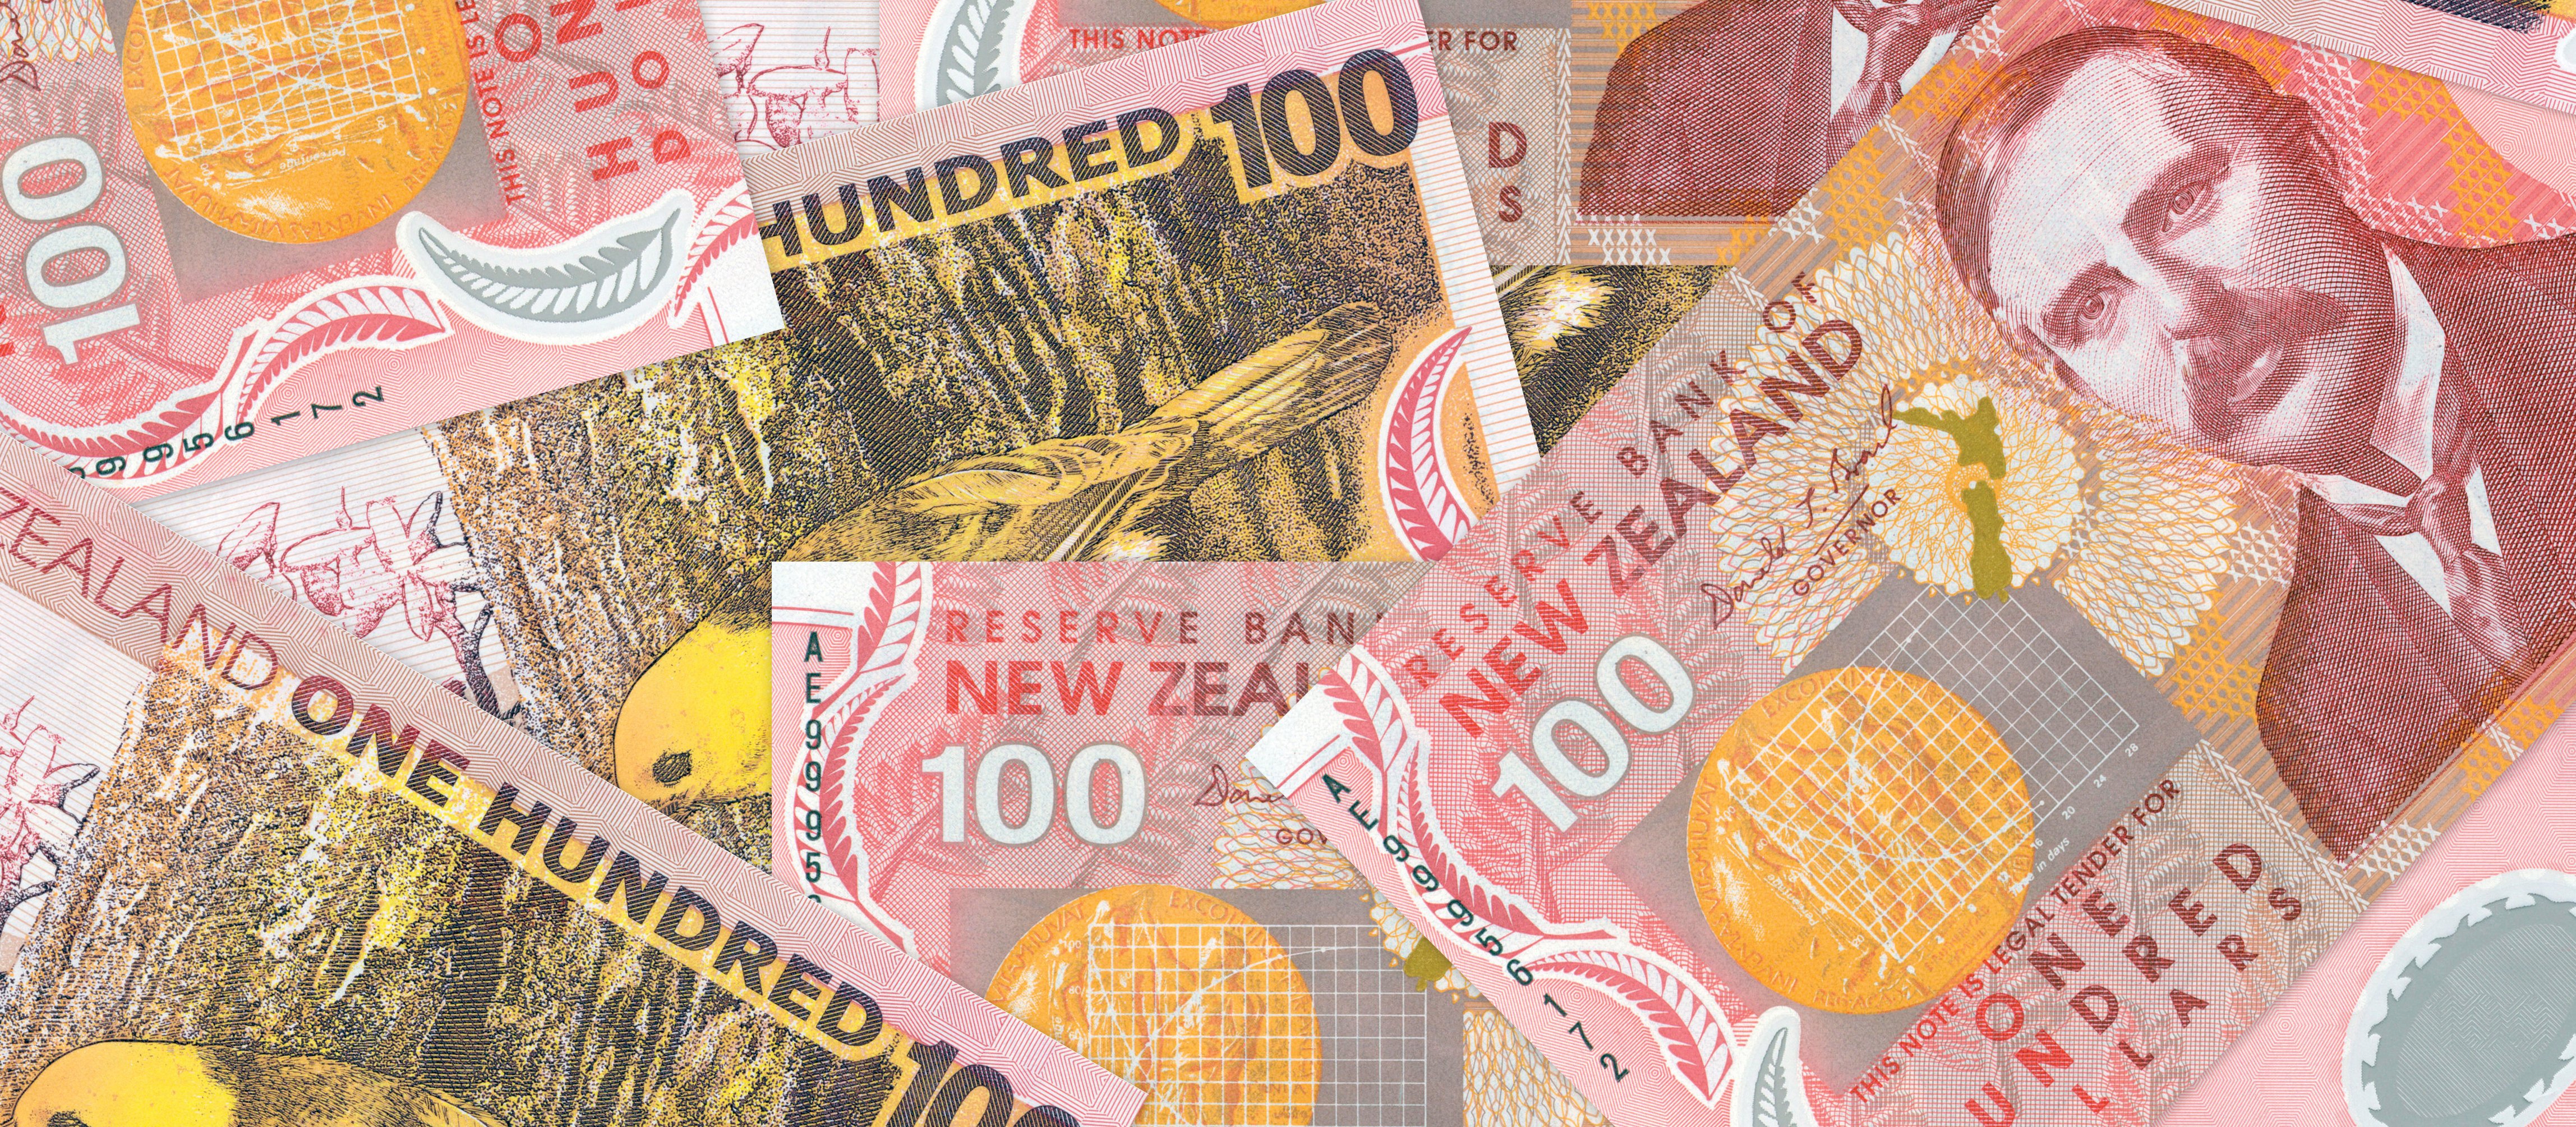 NZ Hundred dollar Bills CR alexsl on iStock